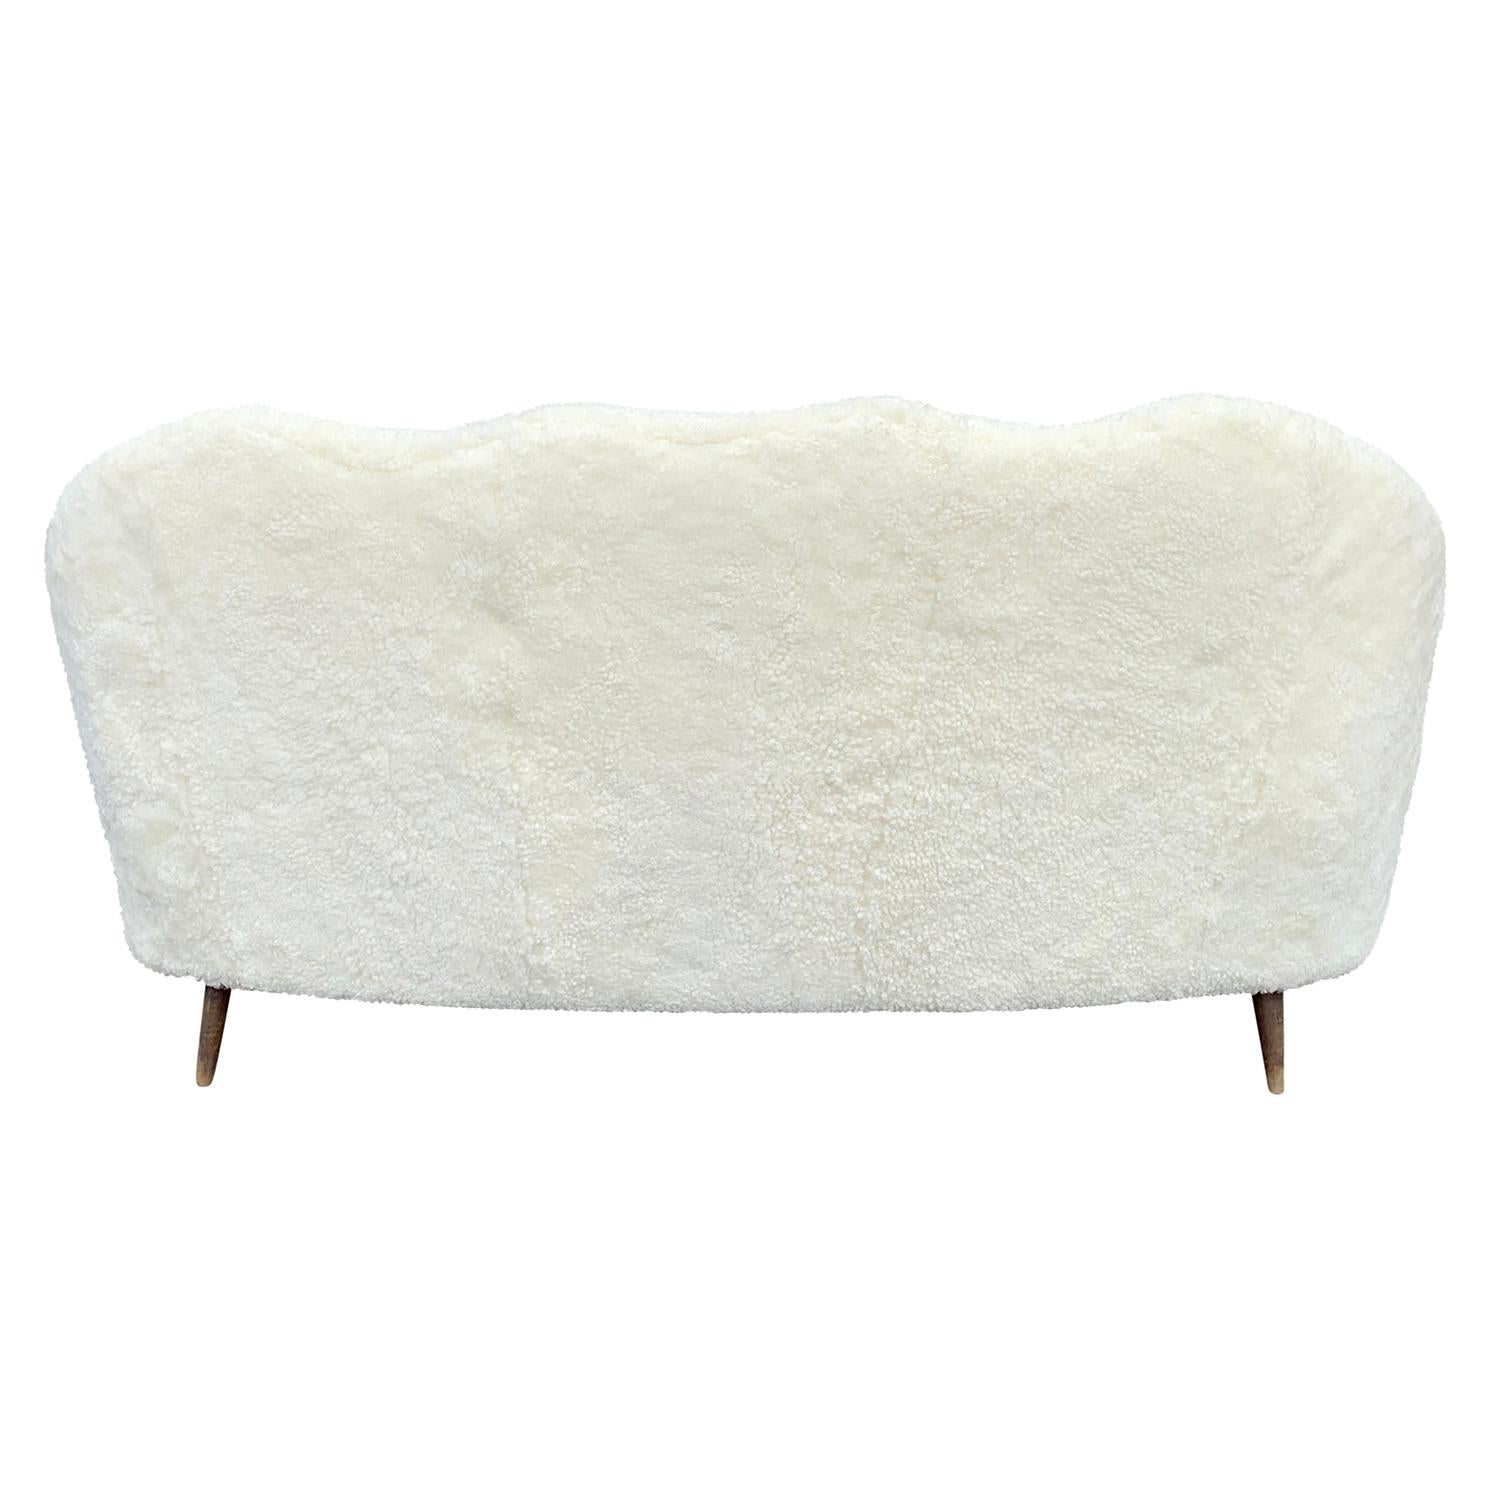 Mid-Century Modern 20th Century White Sheepskin Divano - Vintage Italian Beech Sofa by Paolo Buffa For Sale